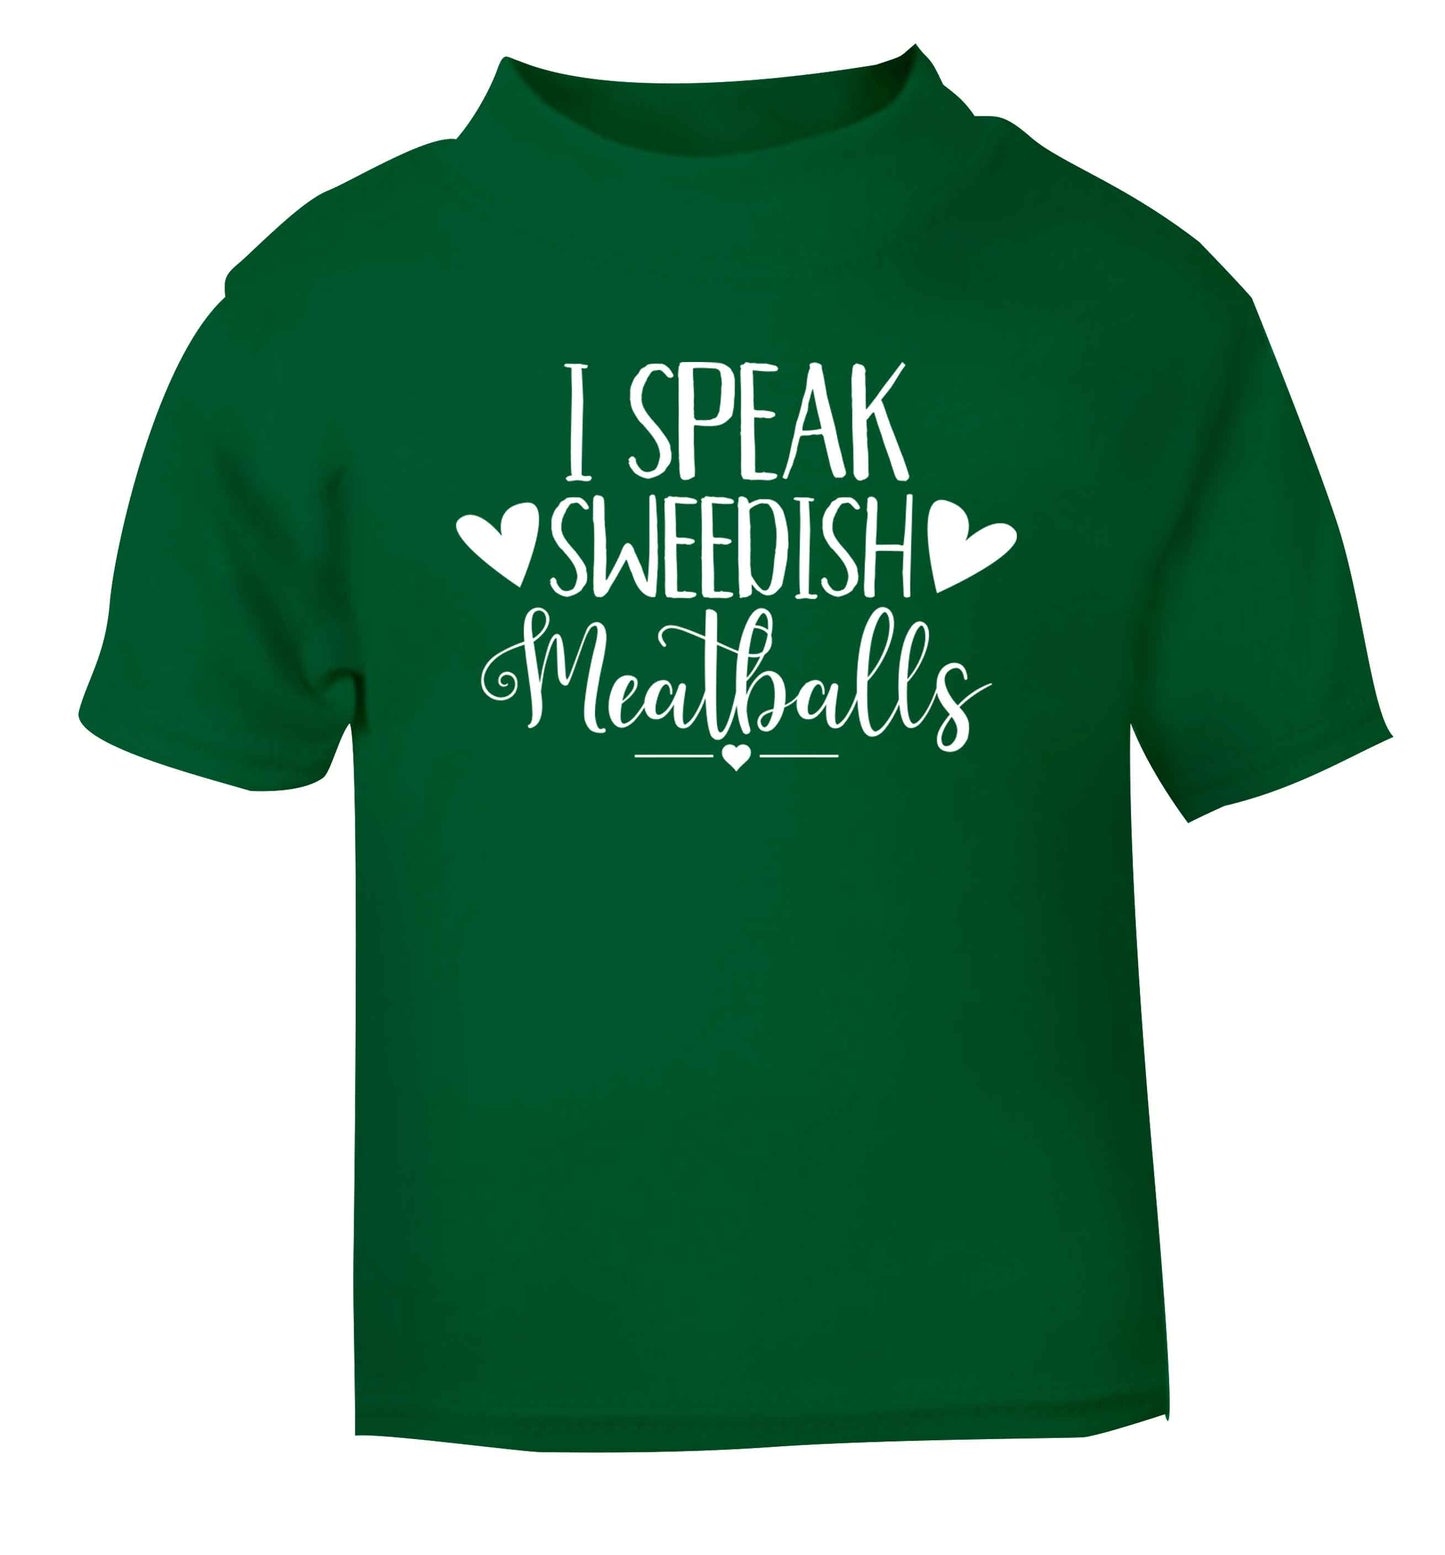 I speak sweedish...meatballs green Baby Toddler Tshirt 2 Years